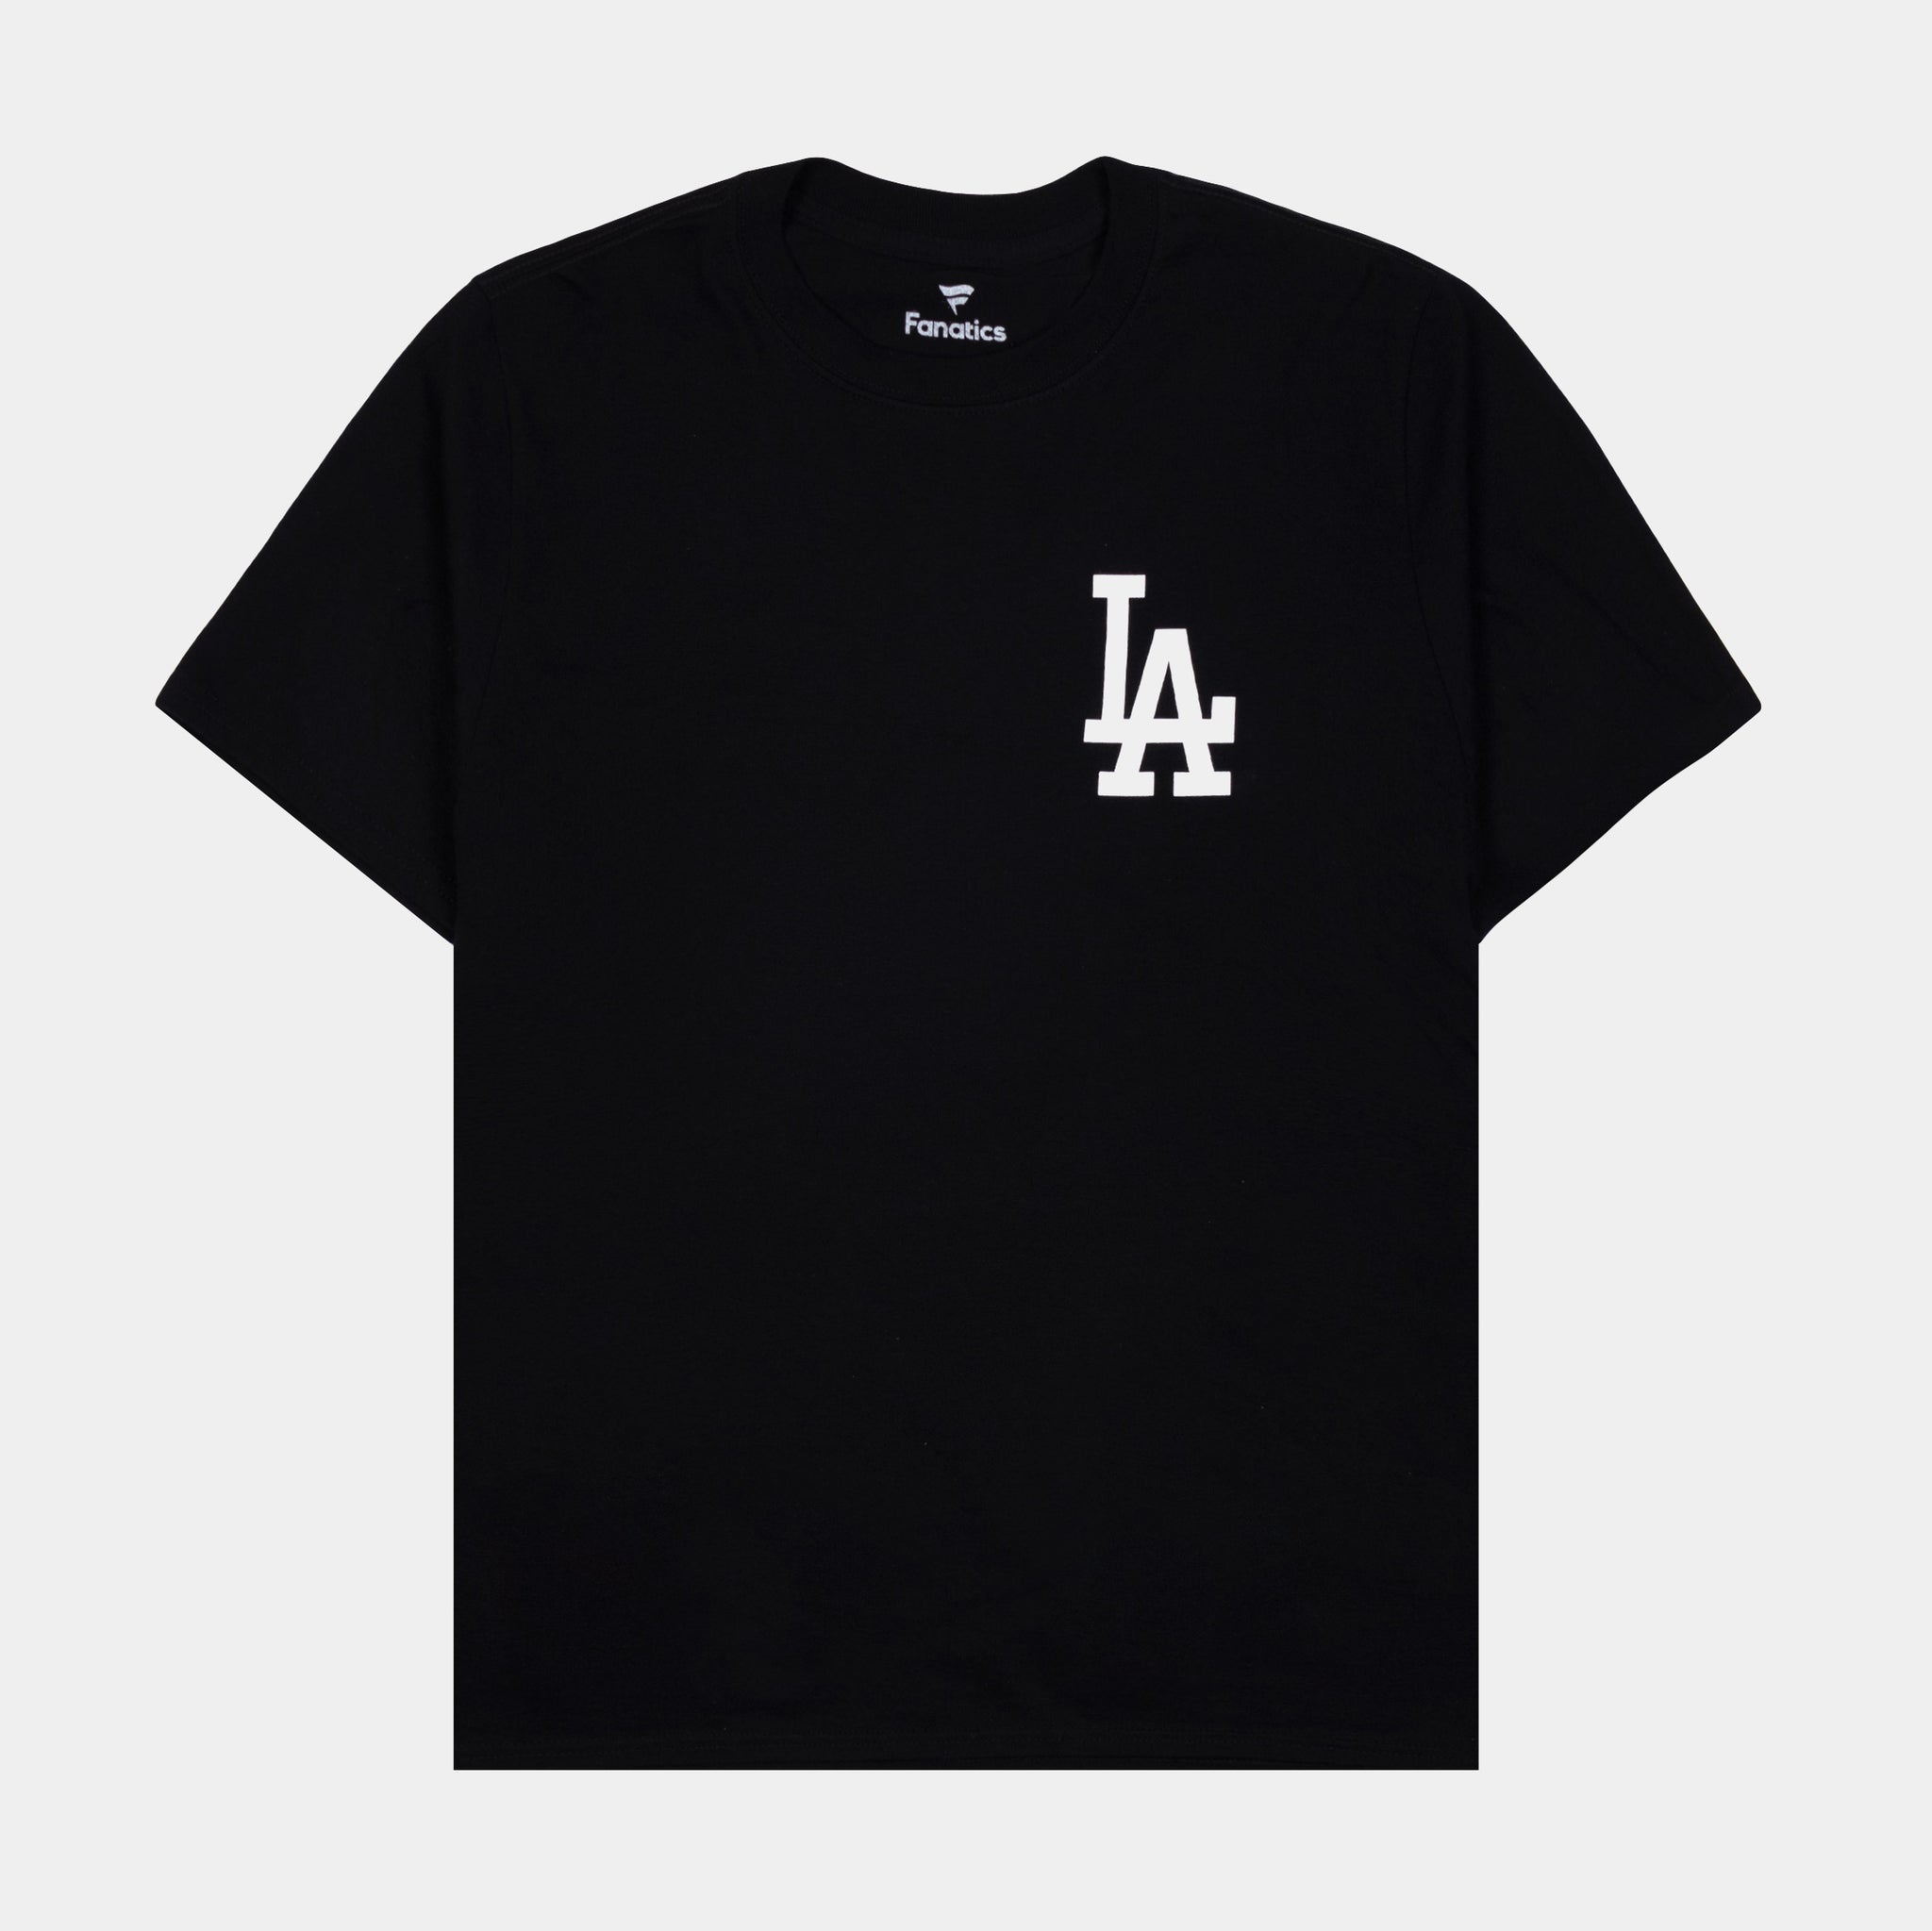 LA Dodgers Fanatics Black/Gray Shirt - Men's Size Large